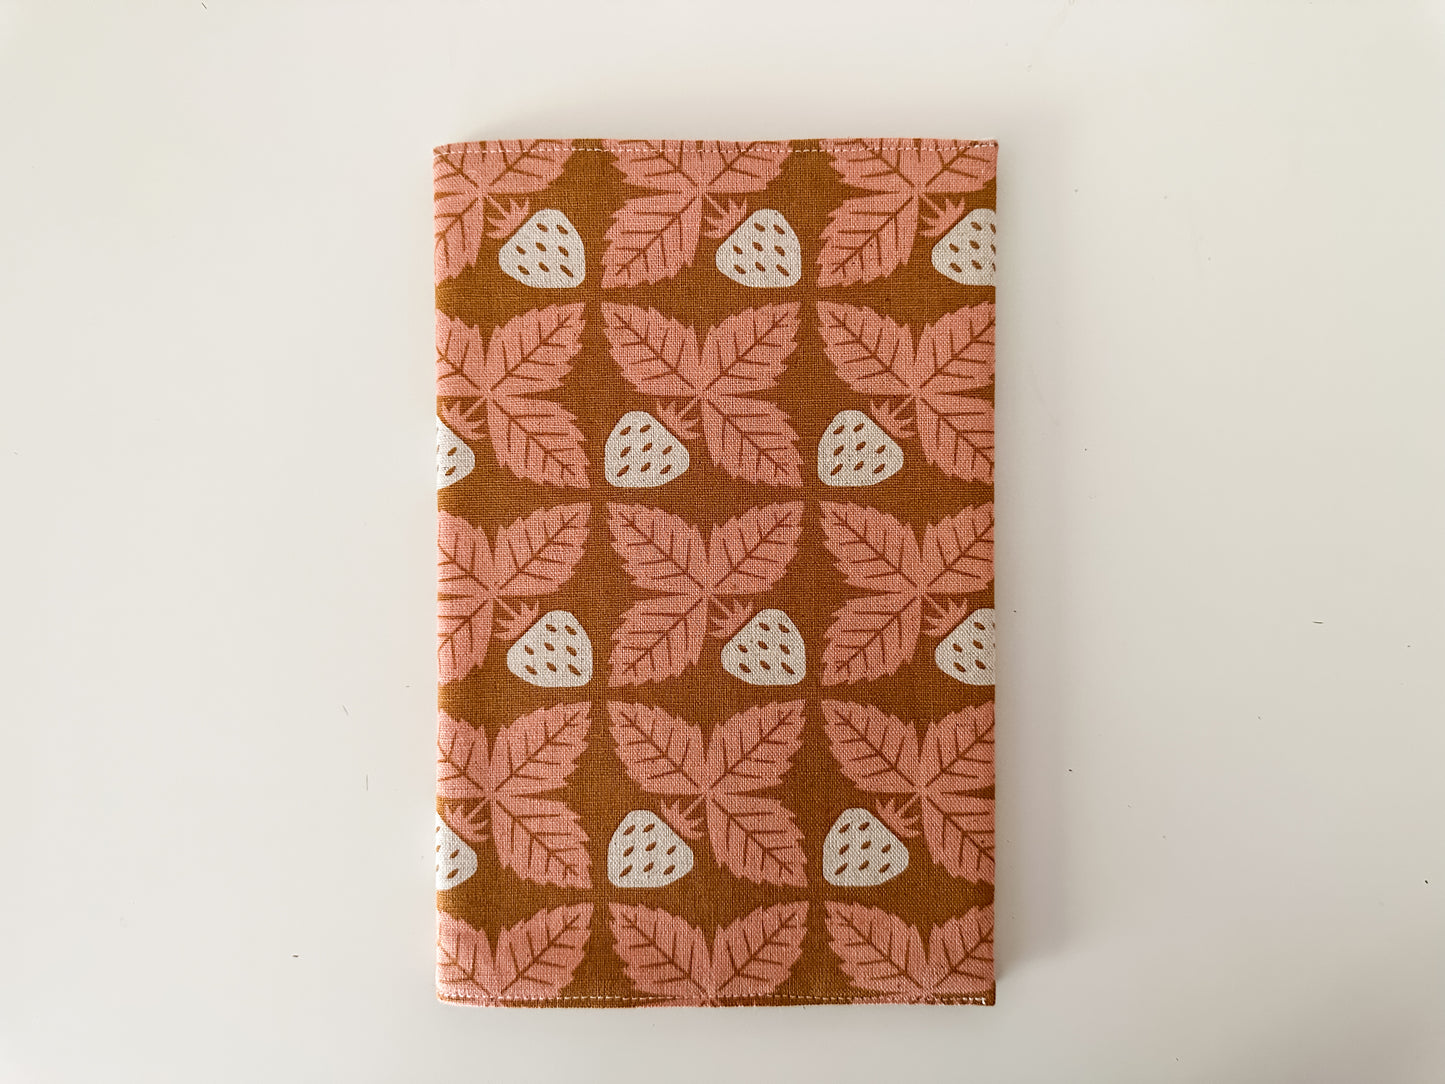 Notebook - Strawberry Fields in Gold